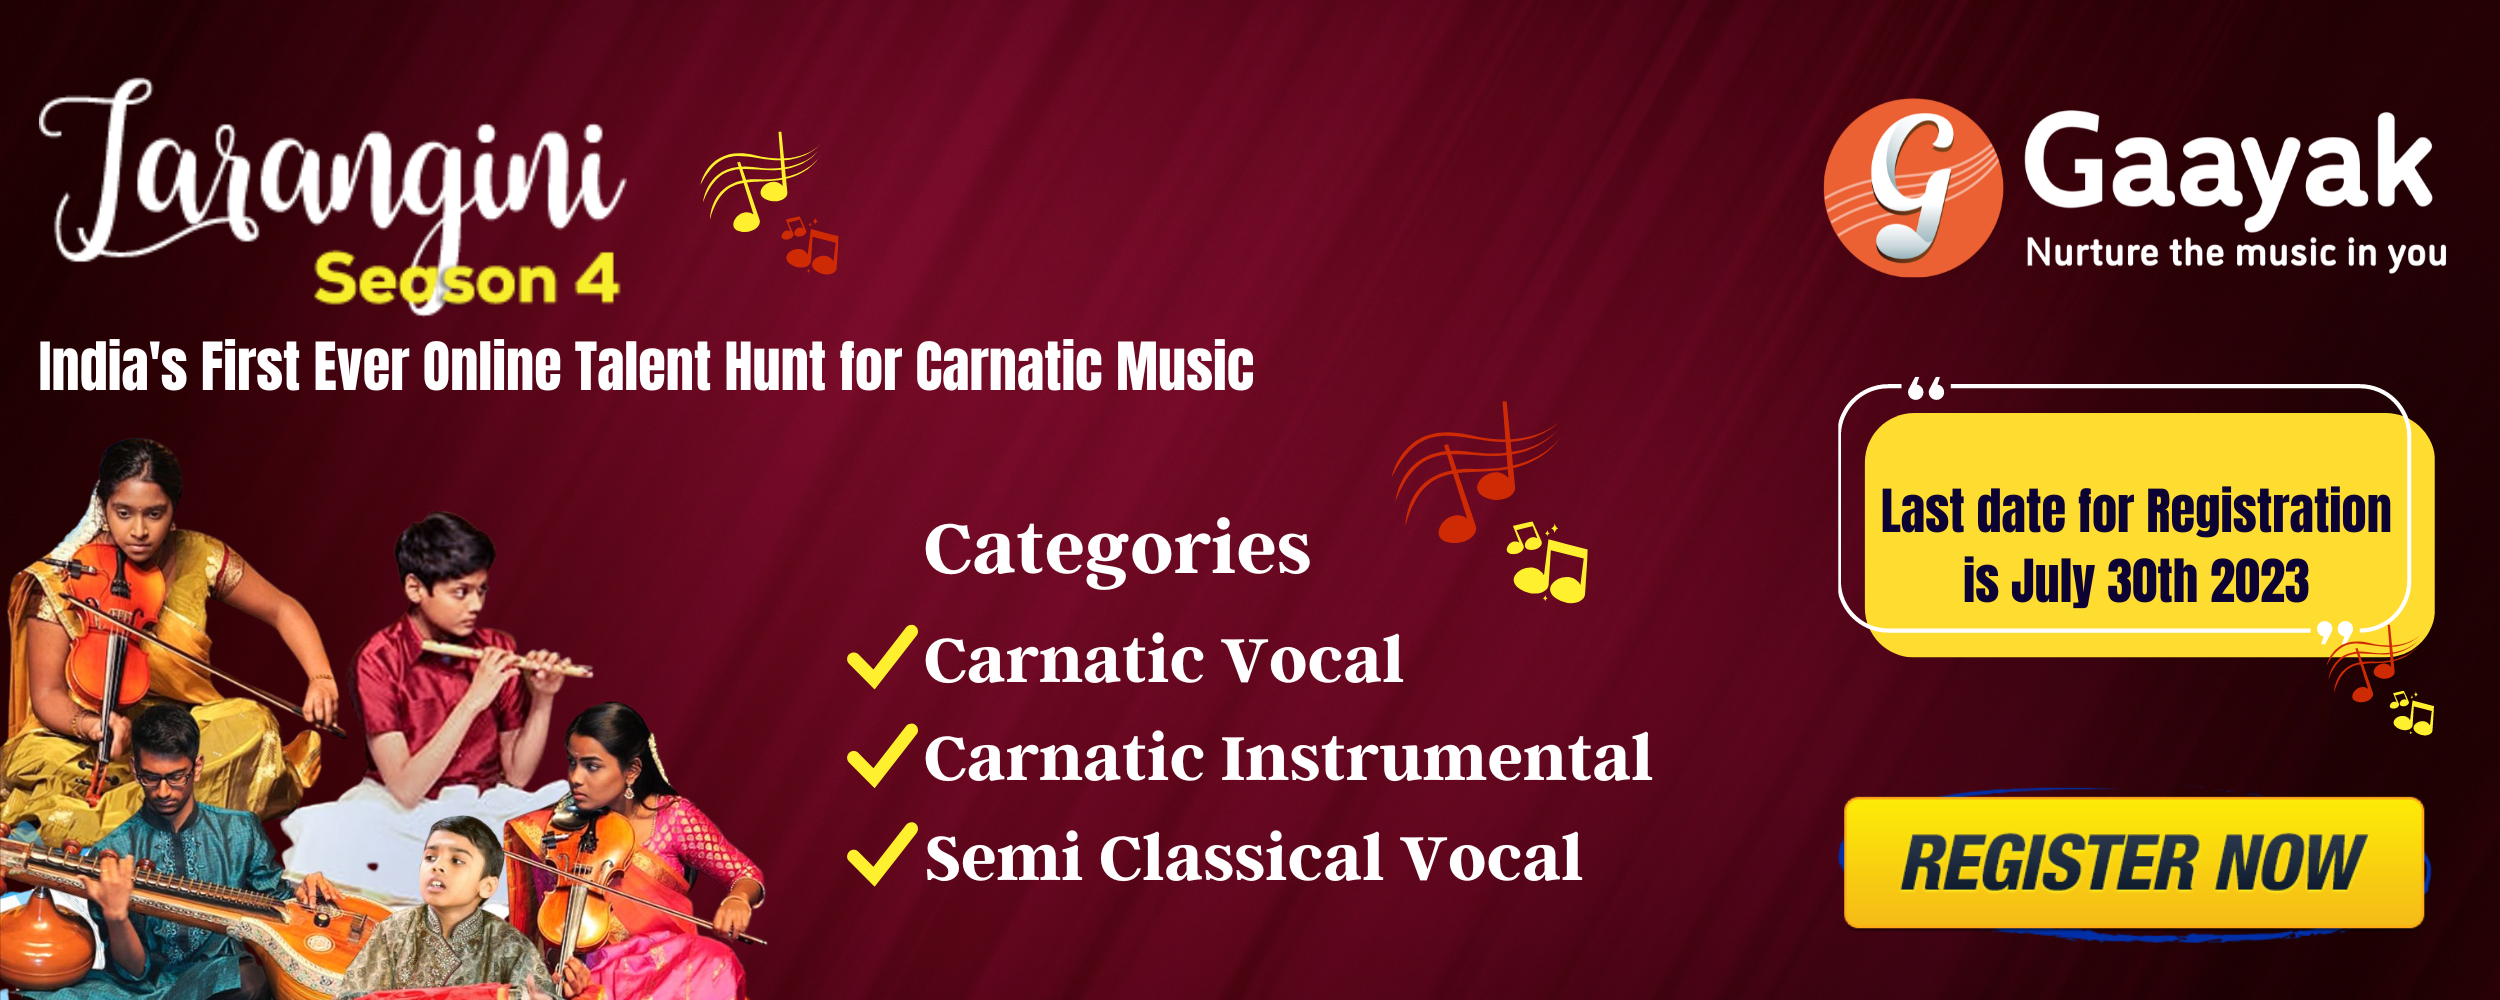 Carnatic Vocal